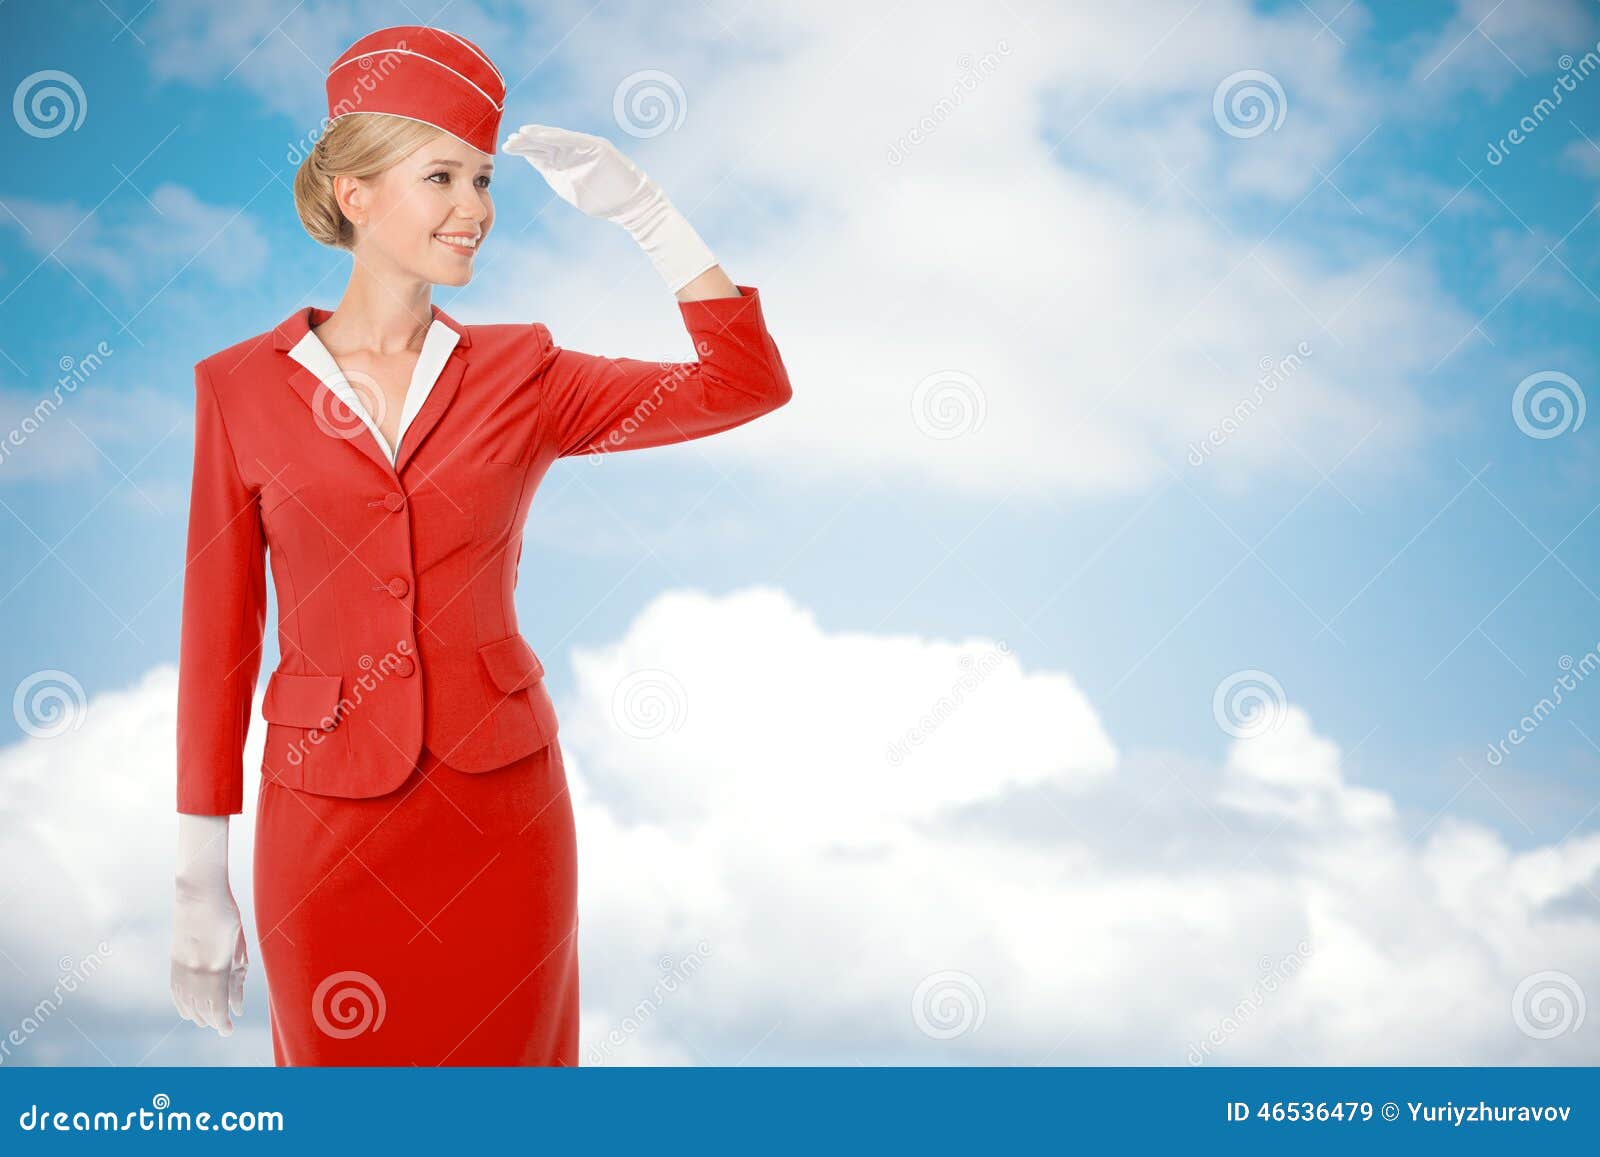 charming stewardess dressed in red uniform.